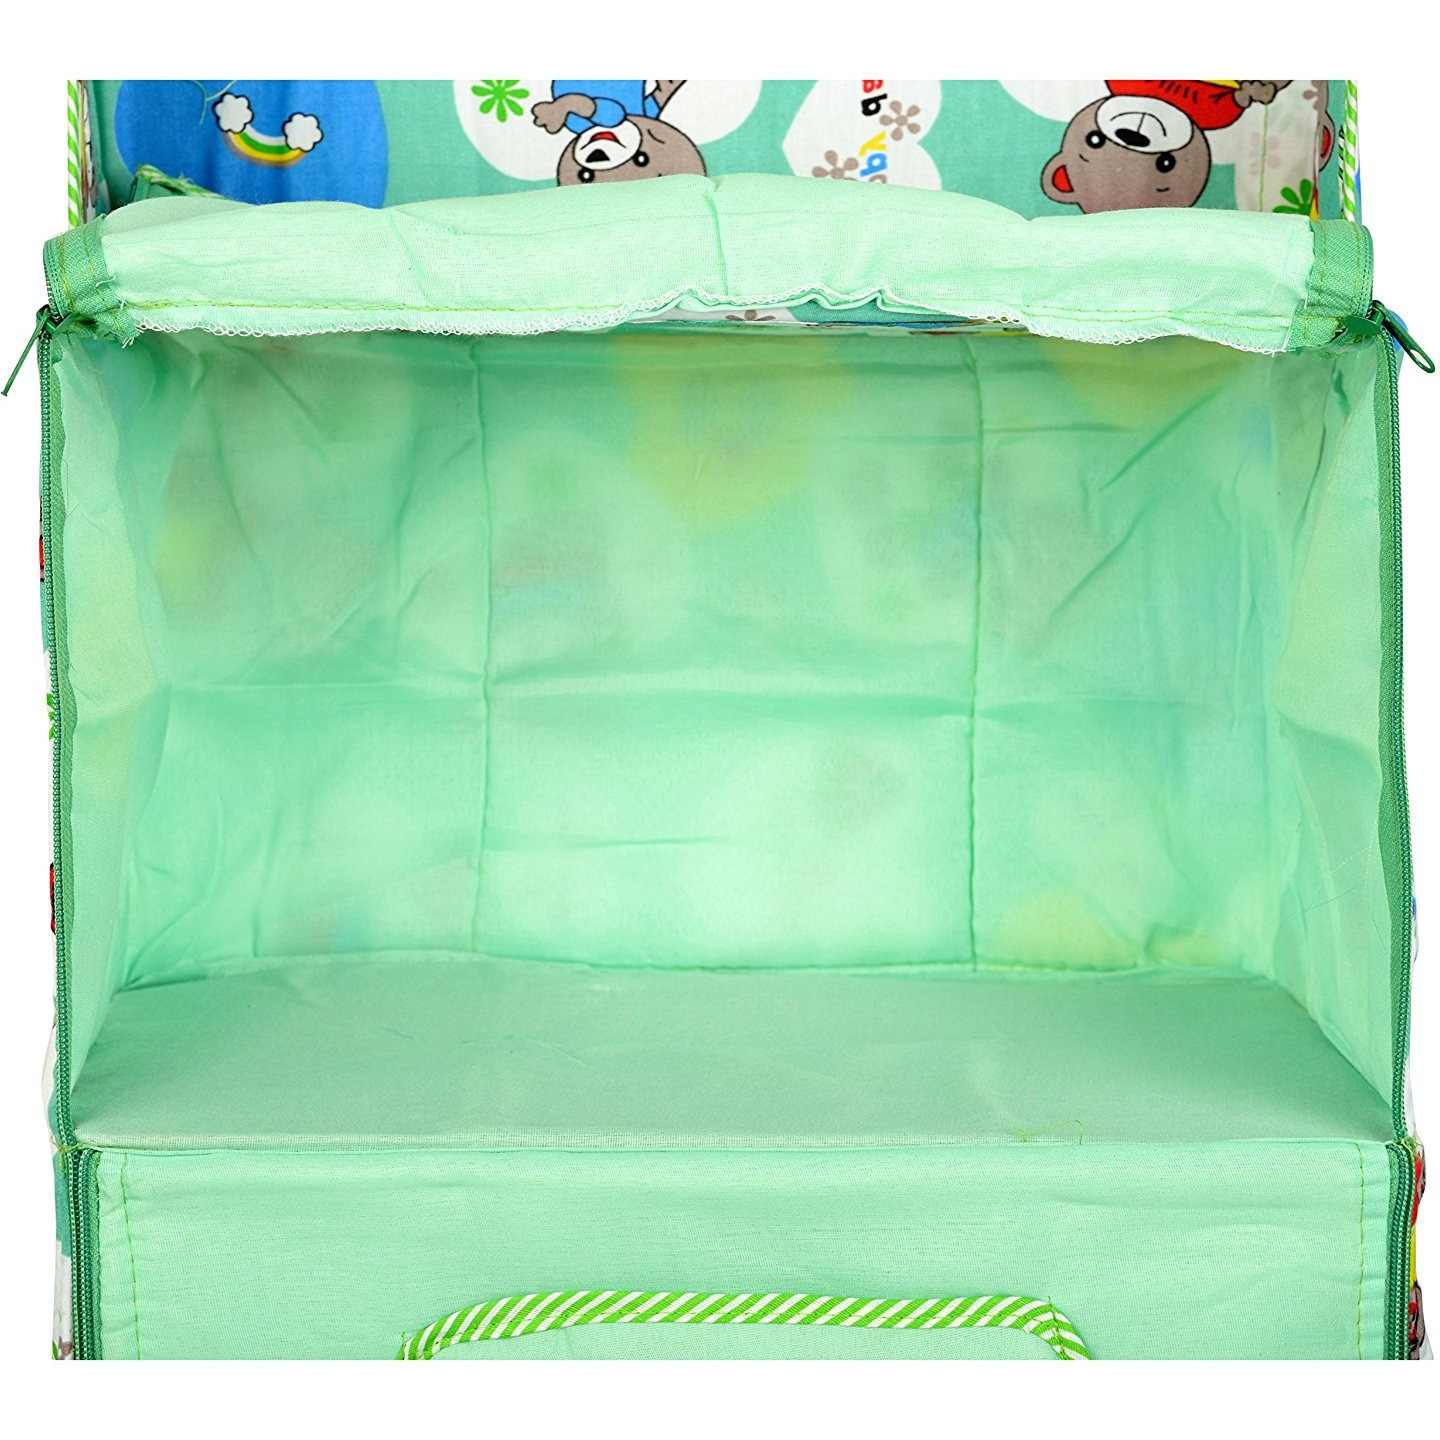 Love Baby Small Teddy Bear Kids Cupboard 3 Step - DKBC17 Green